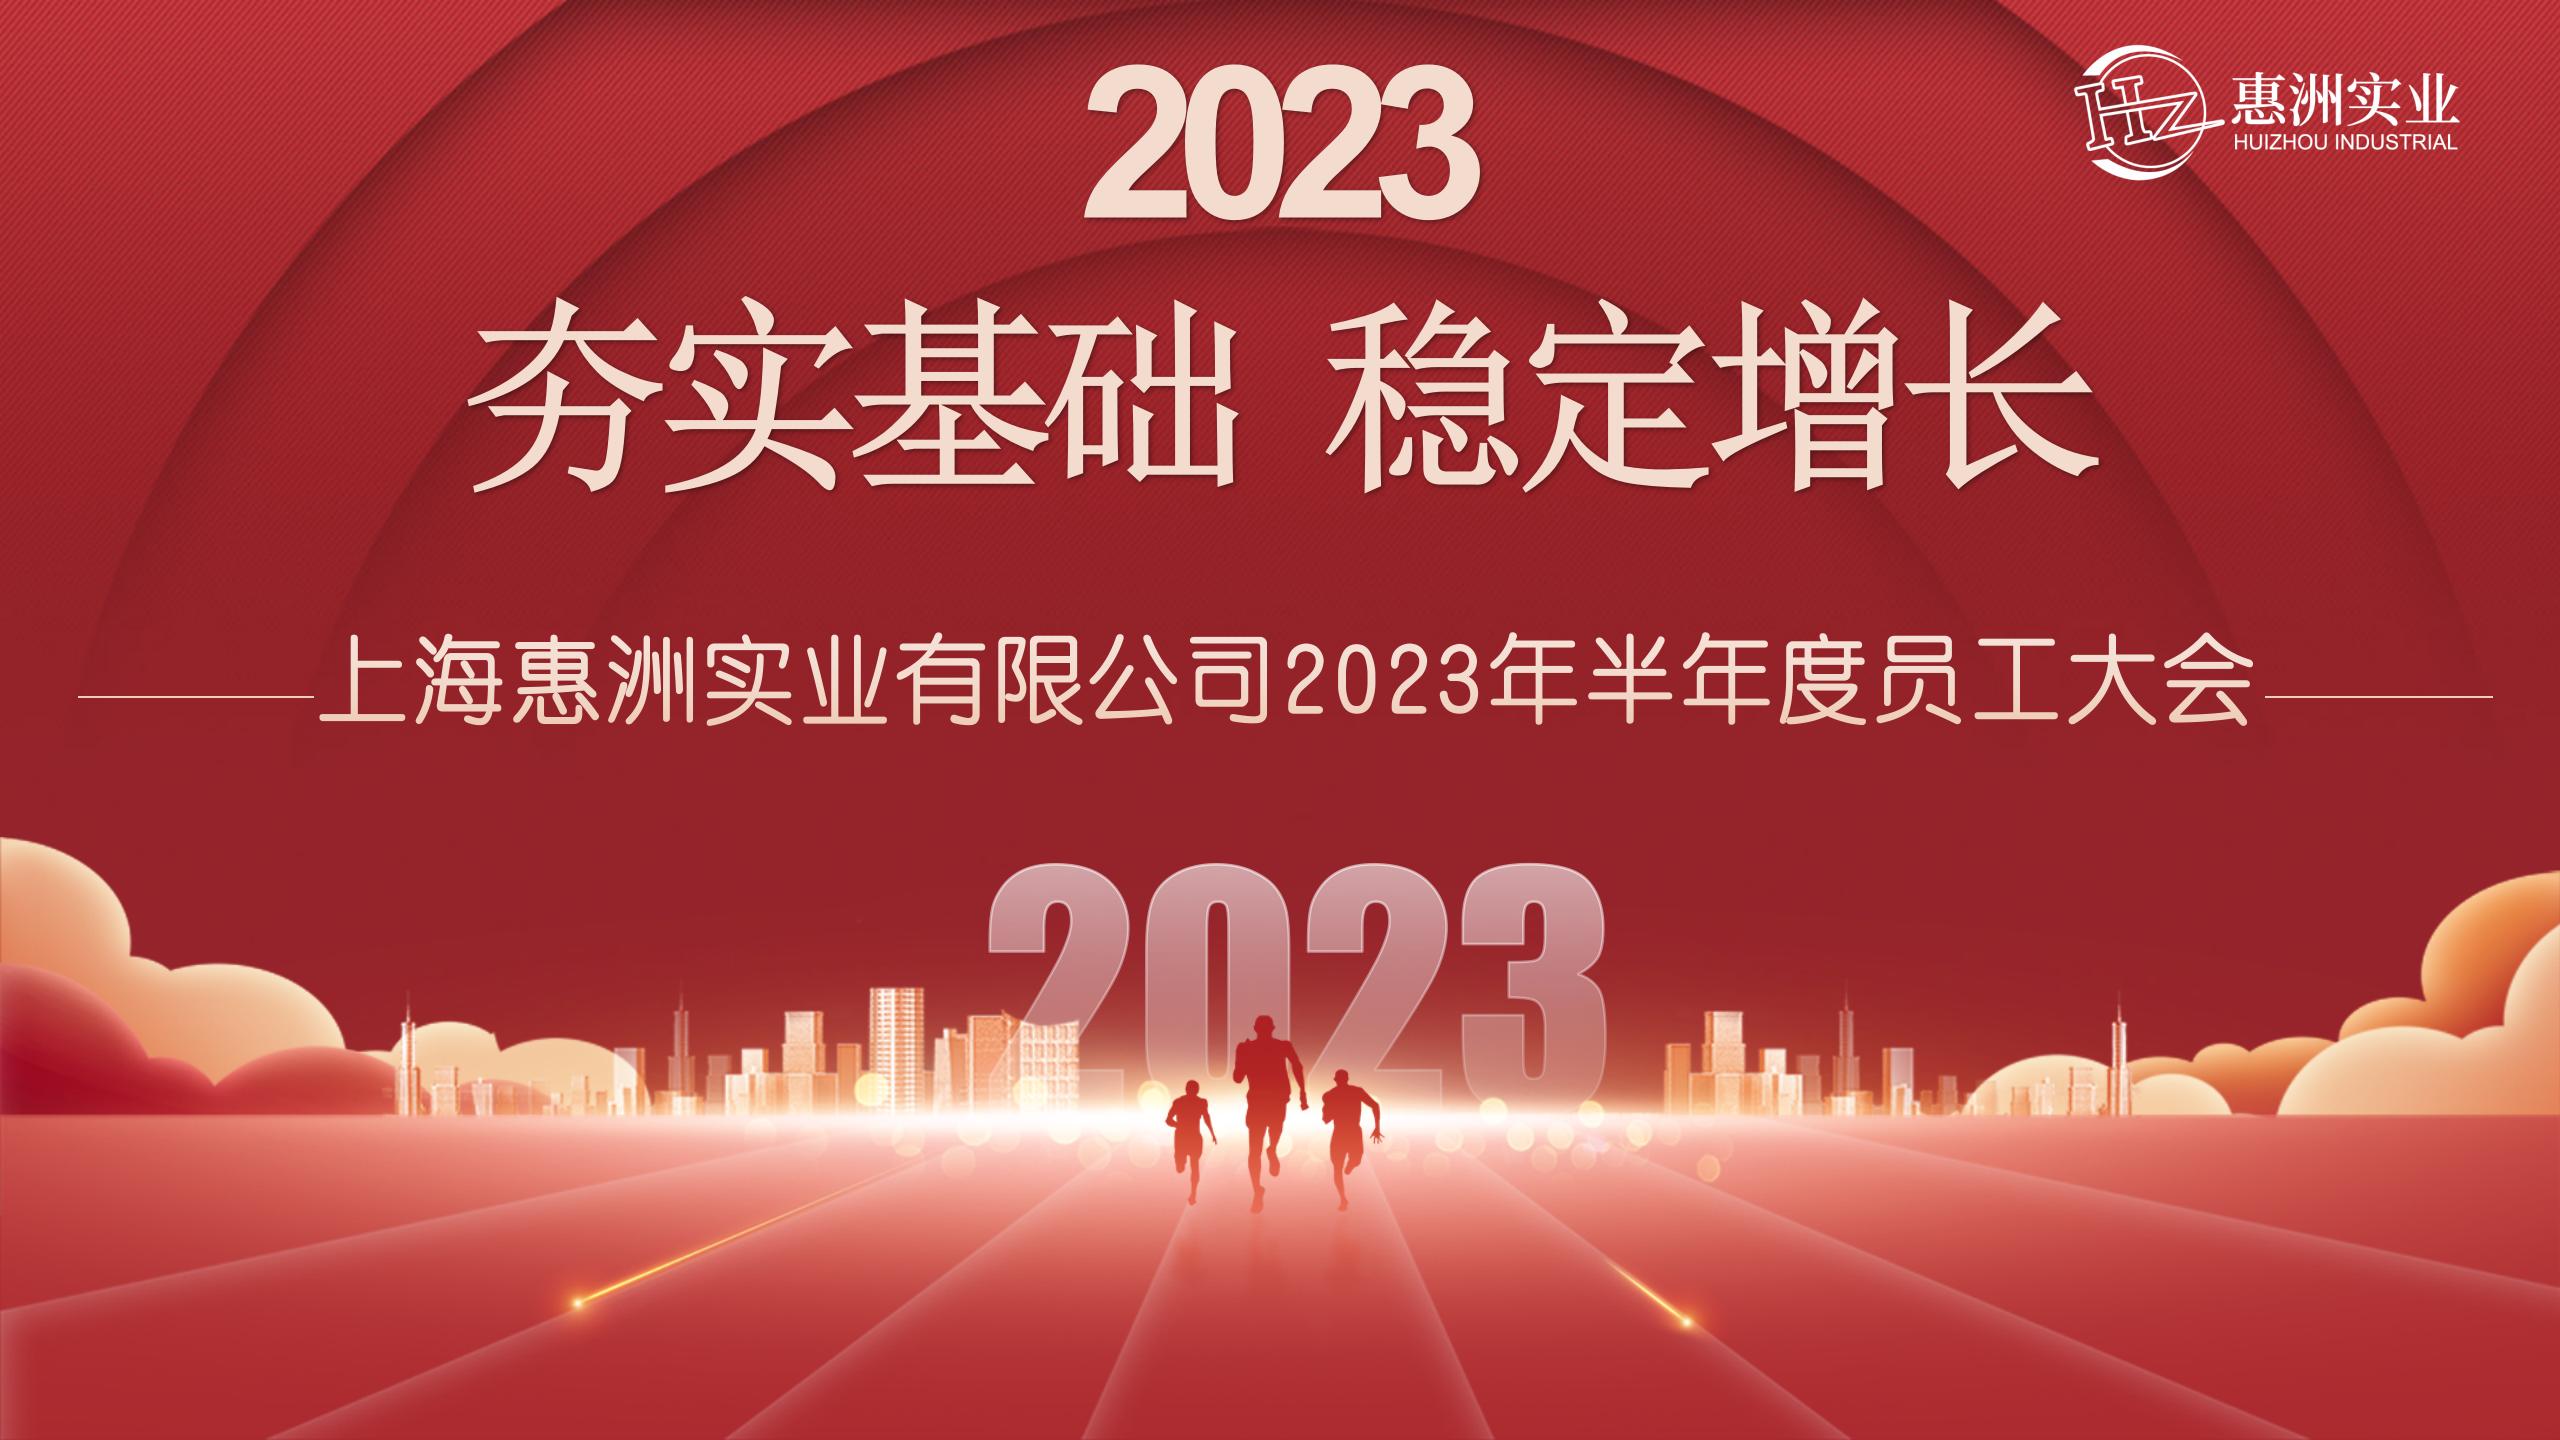 Riunione semestrale del personale di Huizhou 2023 |“Fondamenti, crescita stabile”